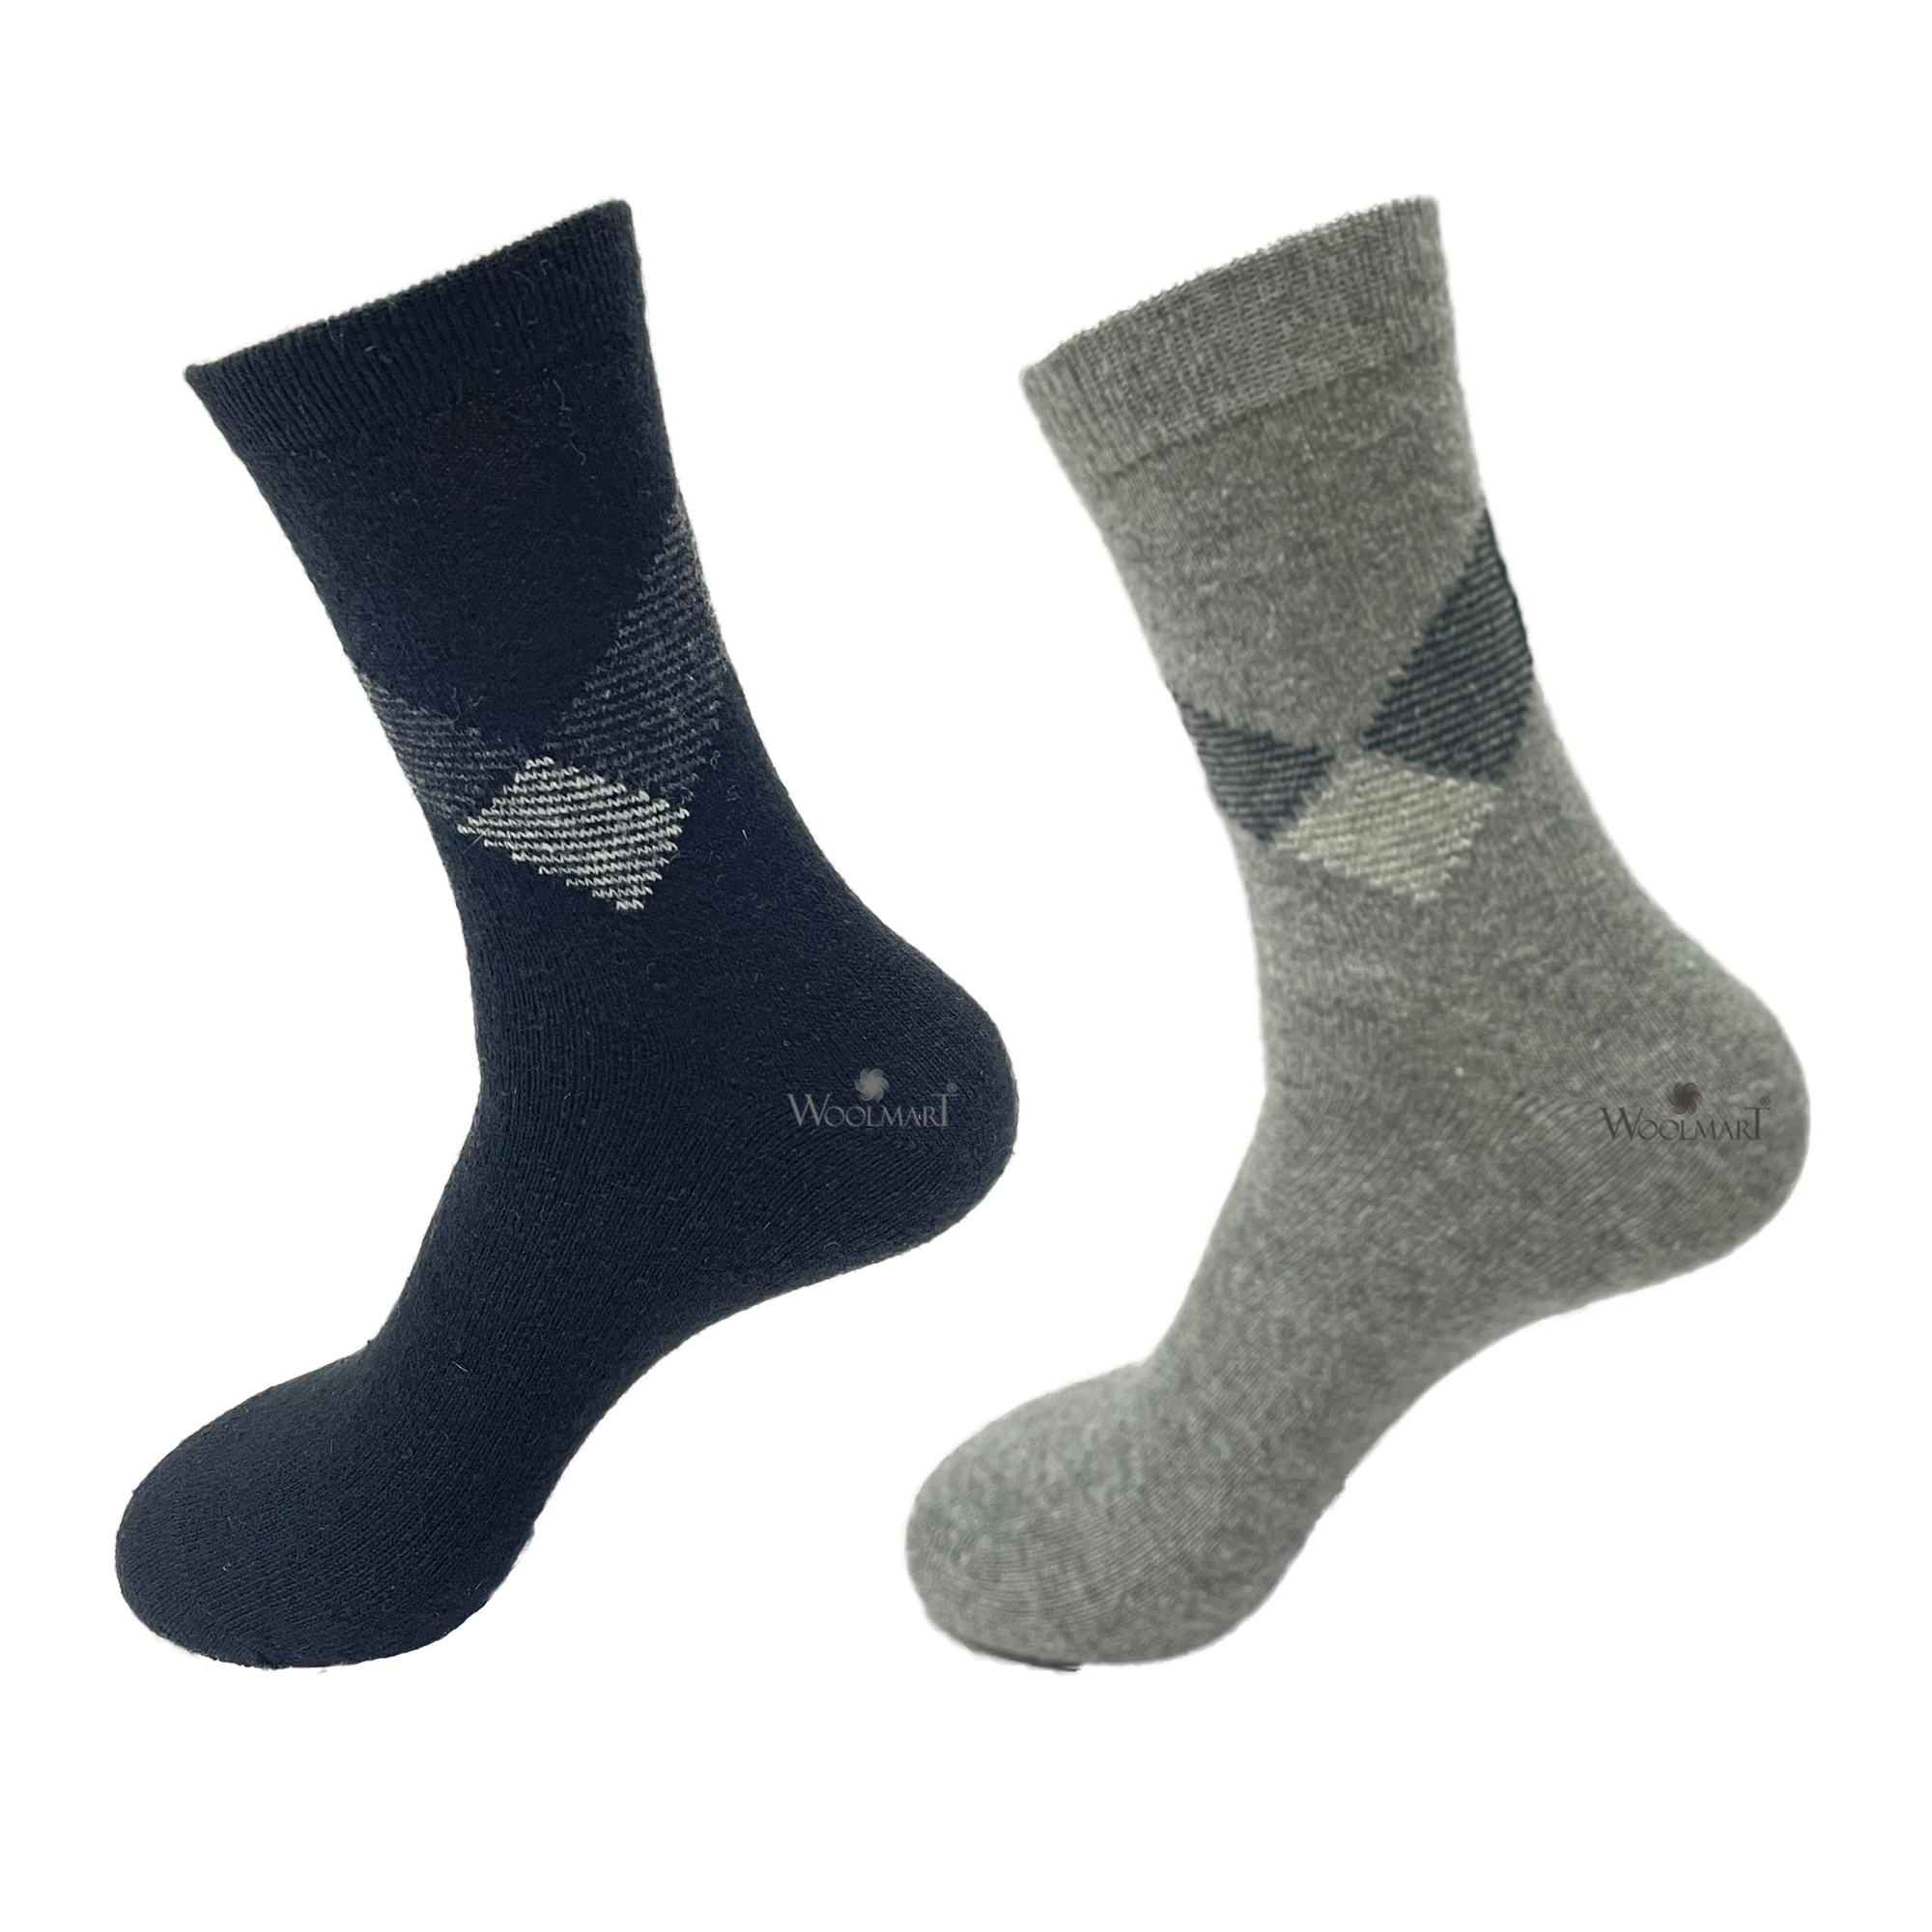 Warm Socks (Pack of 2) Black & Grey